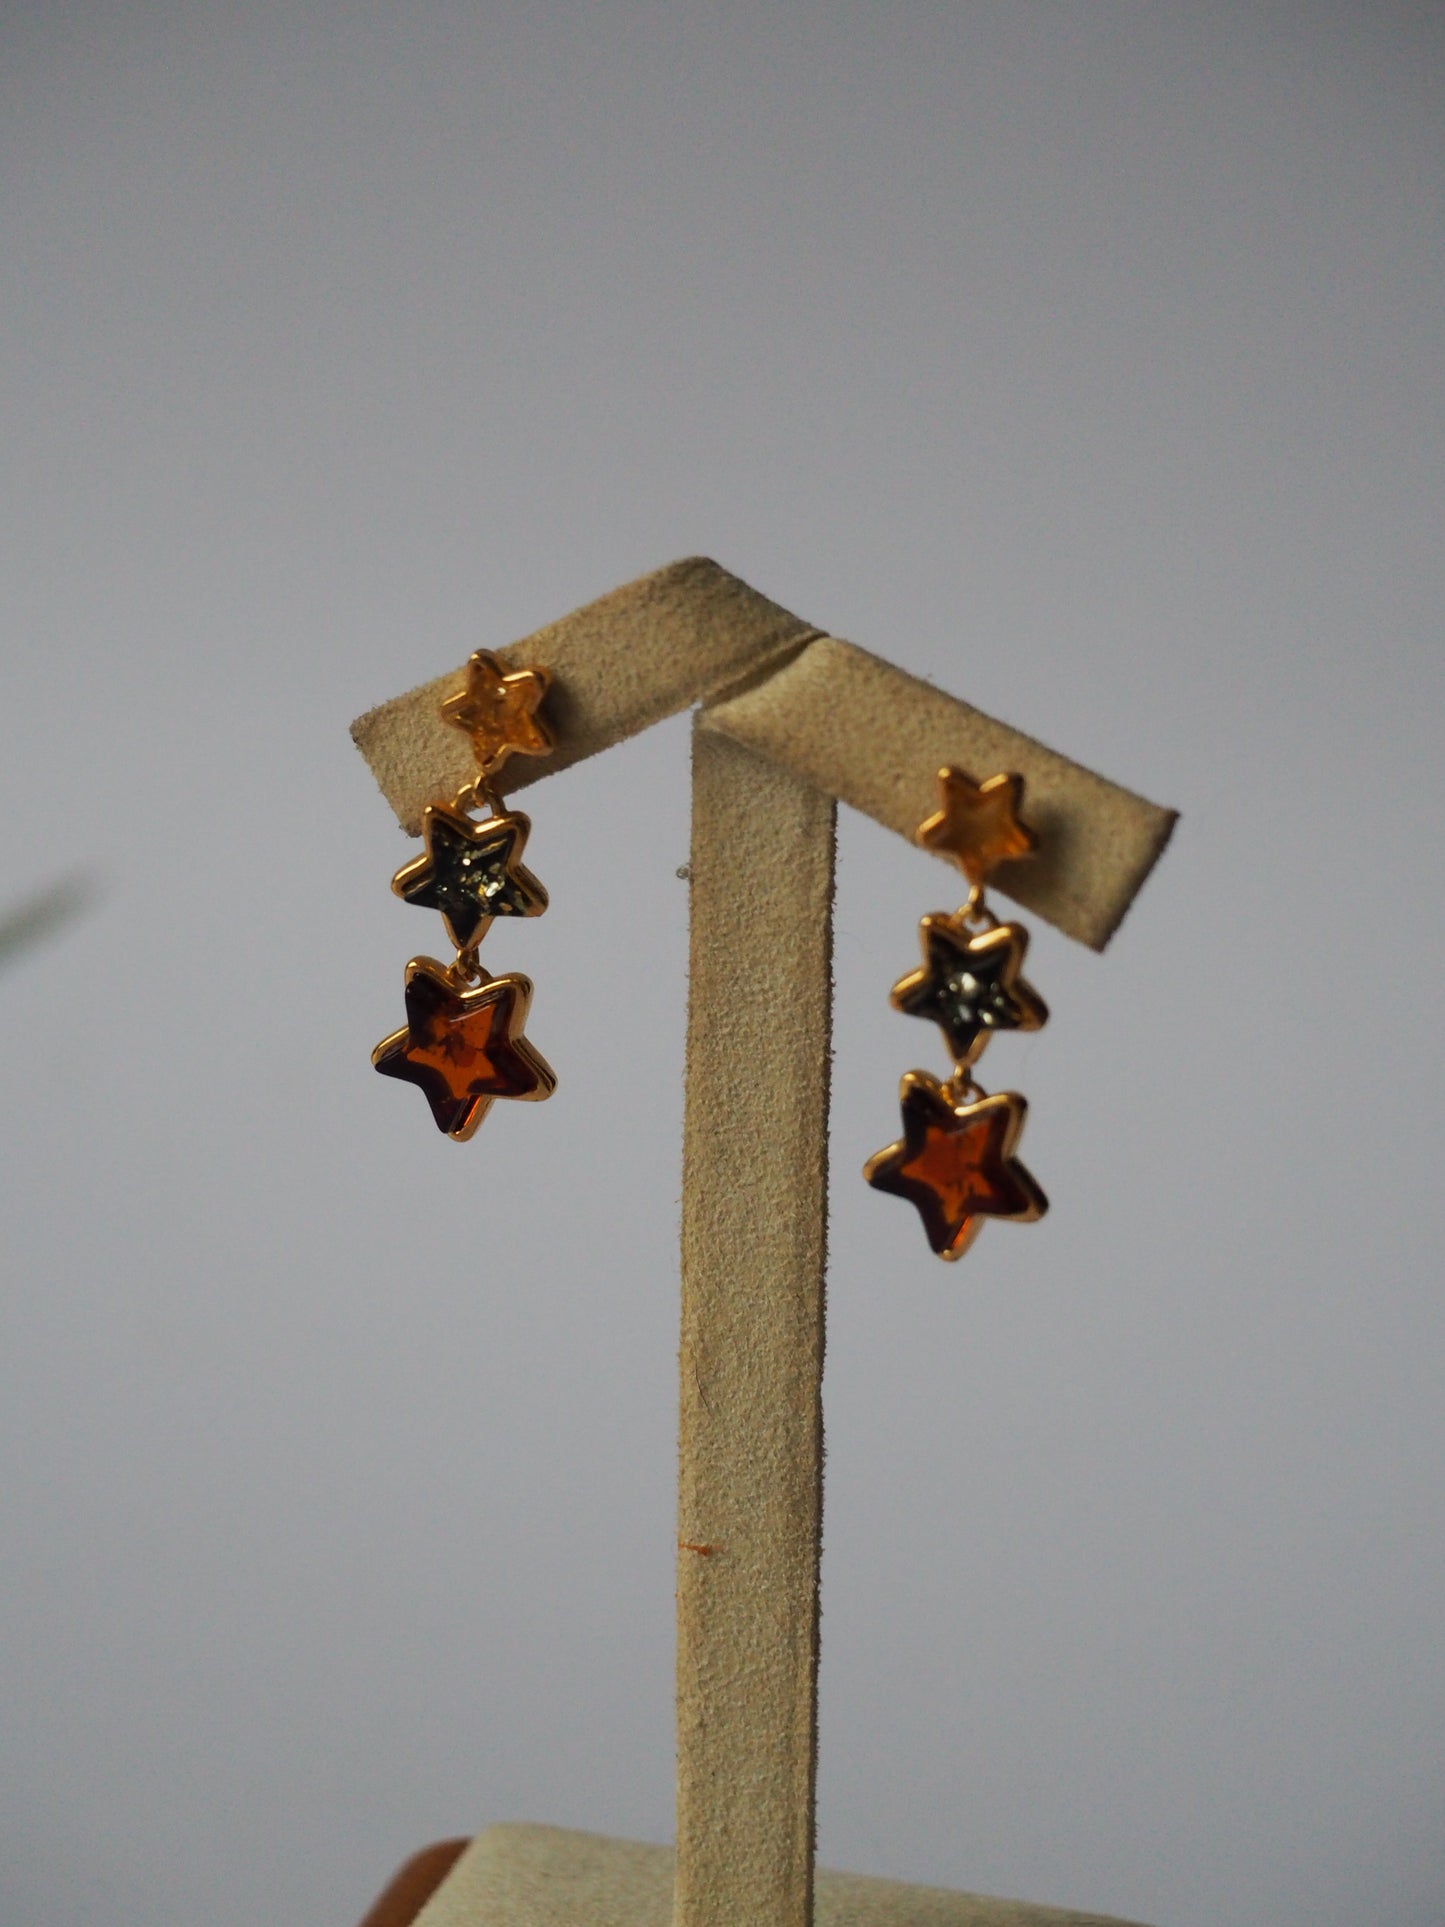 Star Shape Dangling Stud Earrings -Multicolor Amber Gold Plated